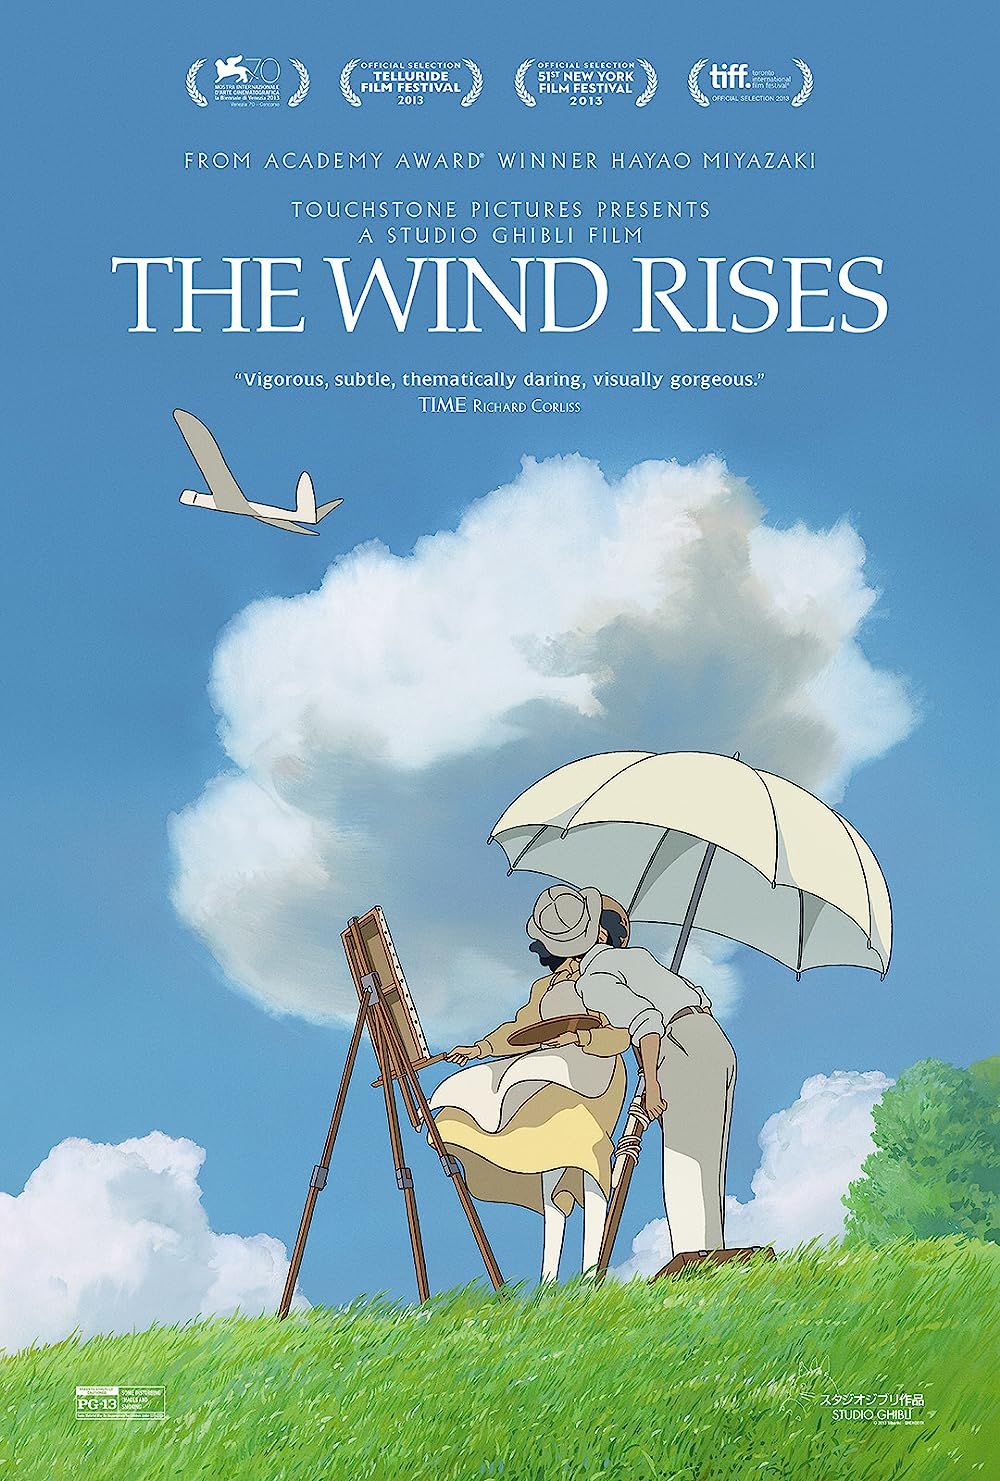 The Wind Rises (2013) manga based movie